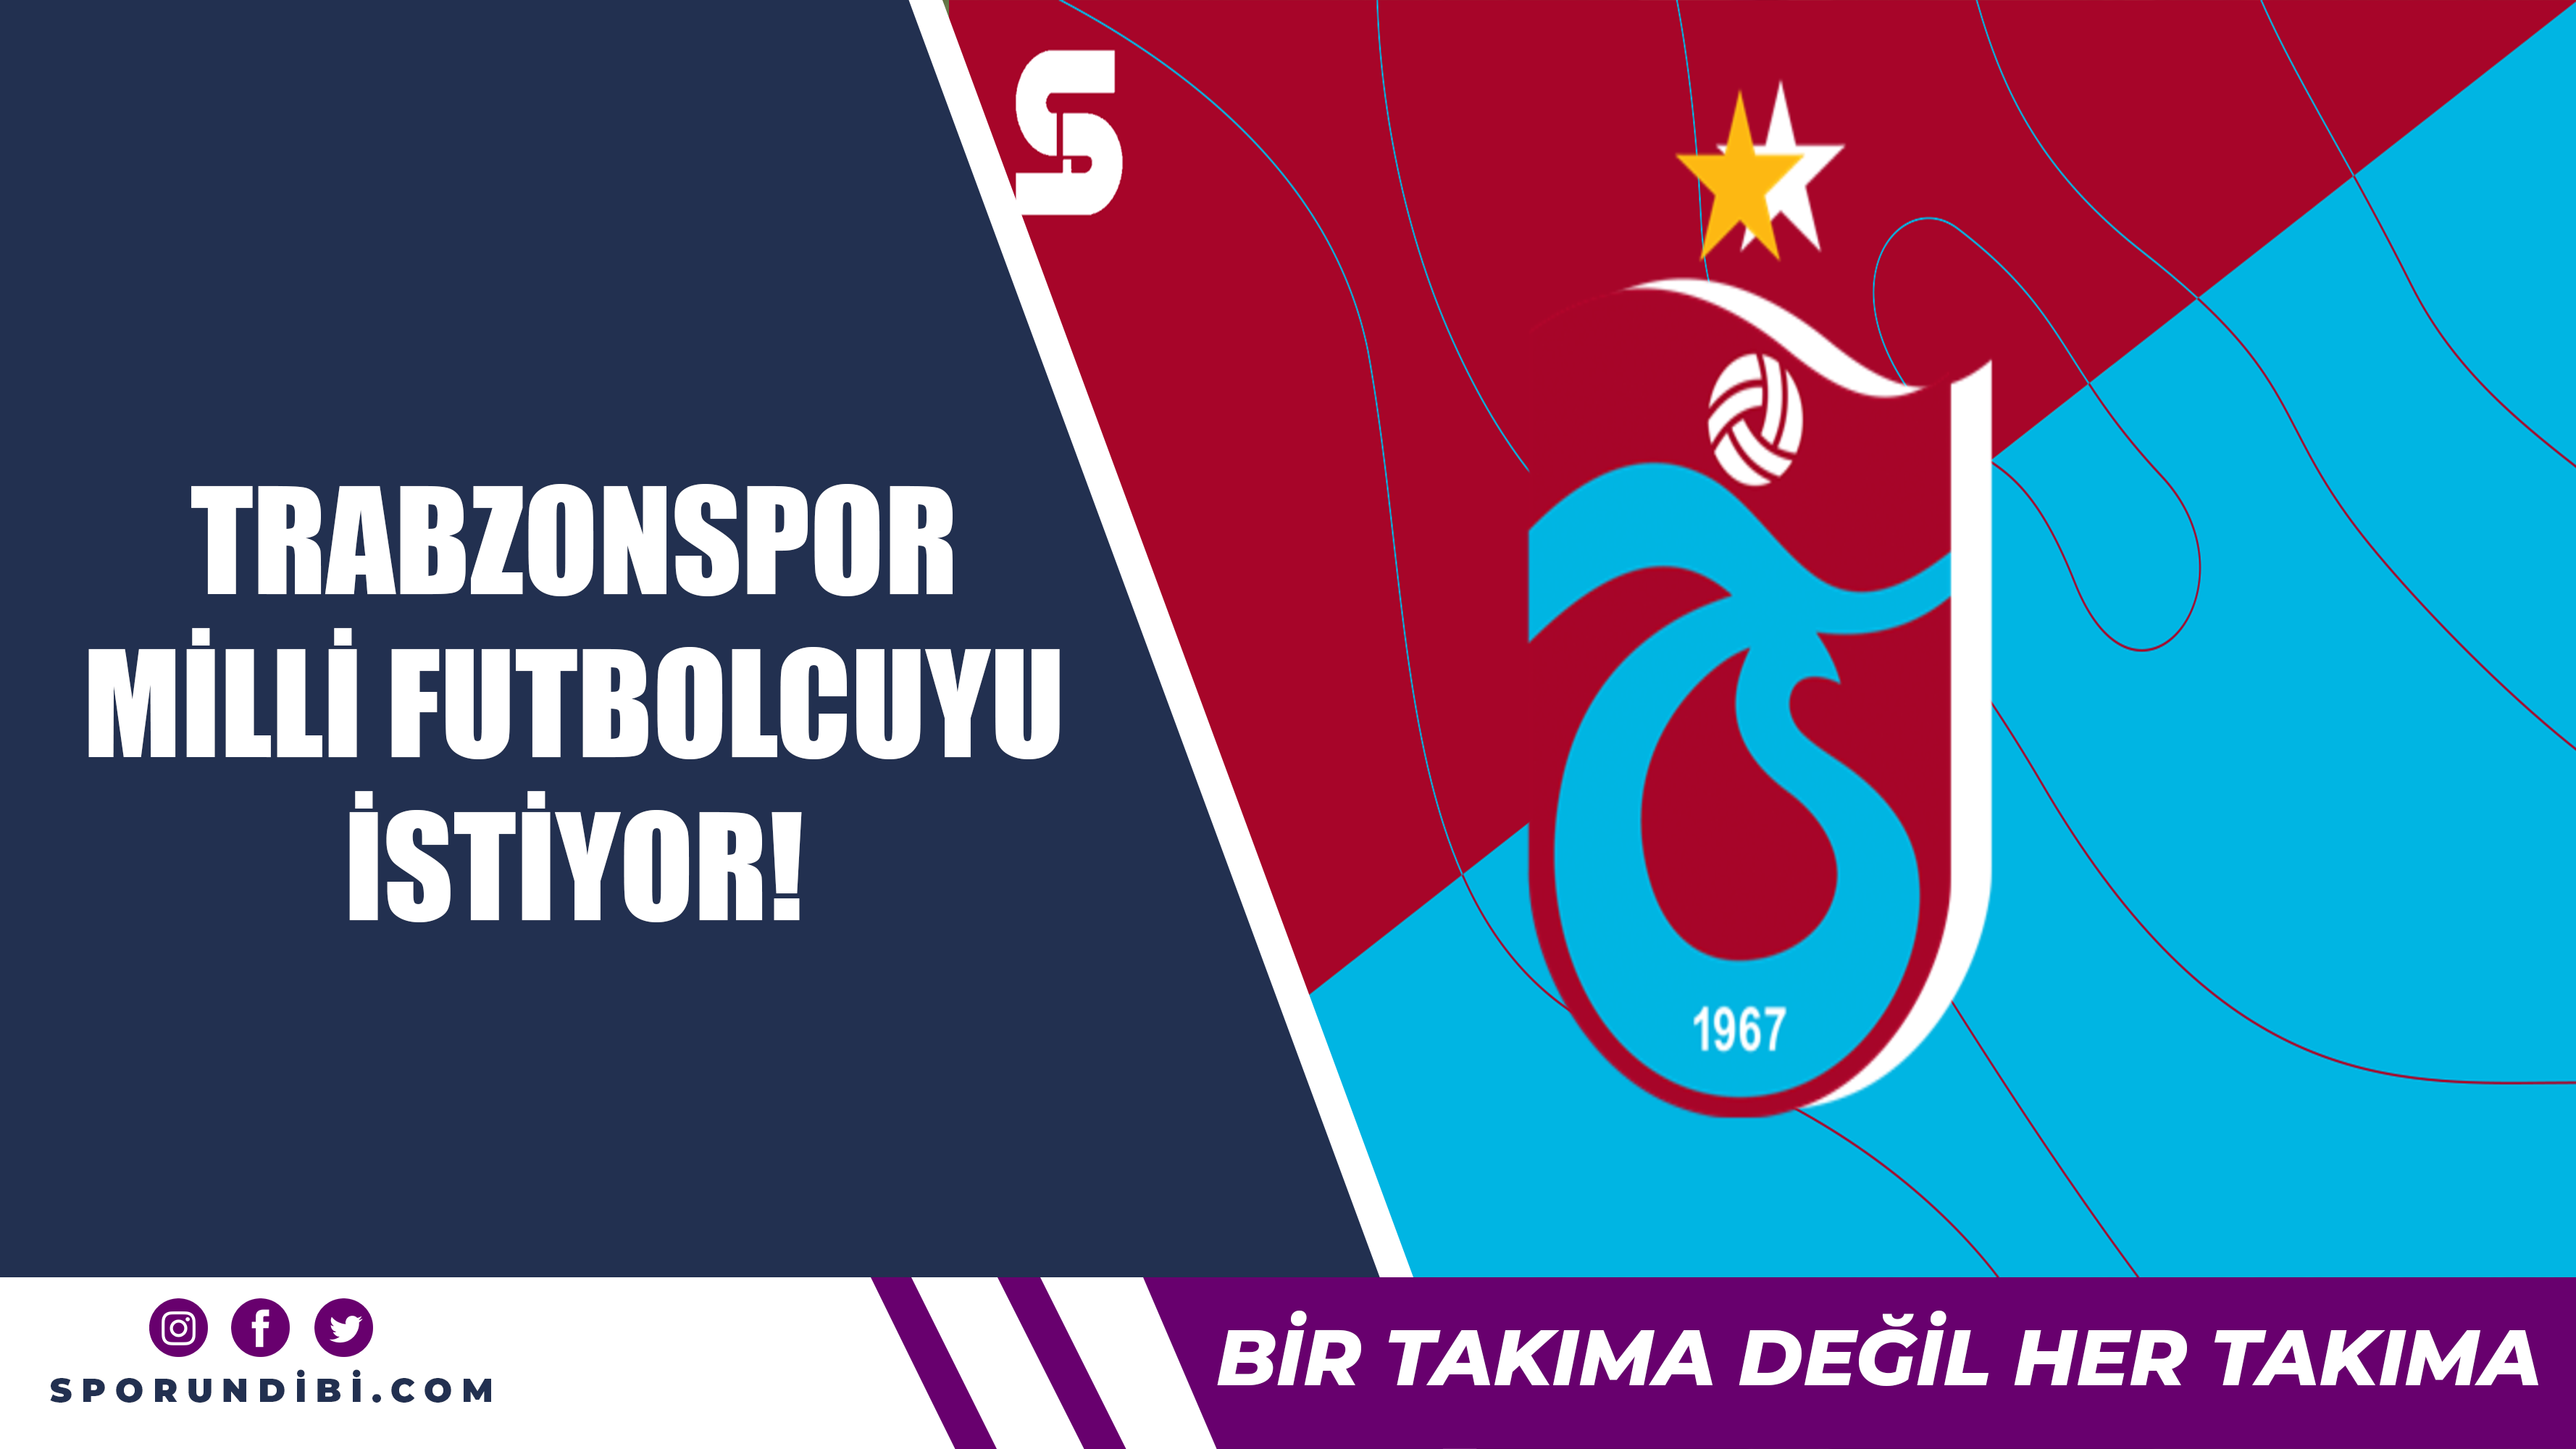 Trabzonspor milli futbolcuyu istiyor!